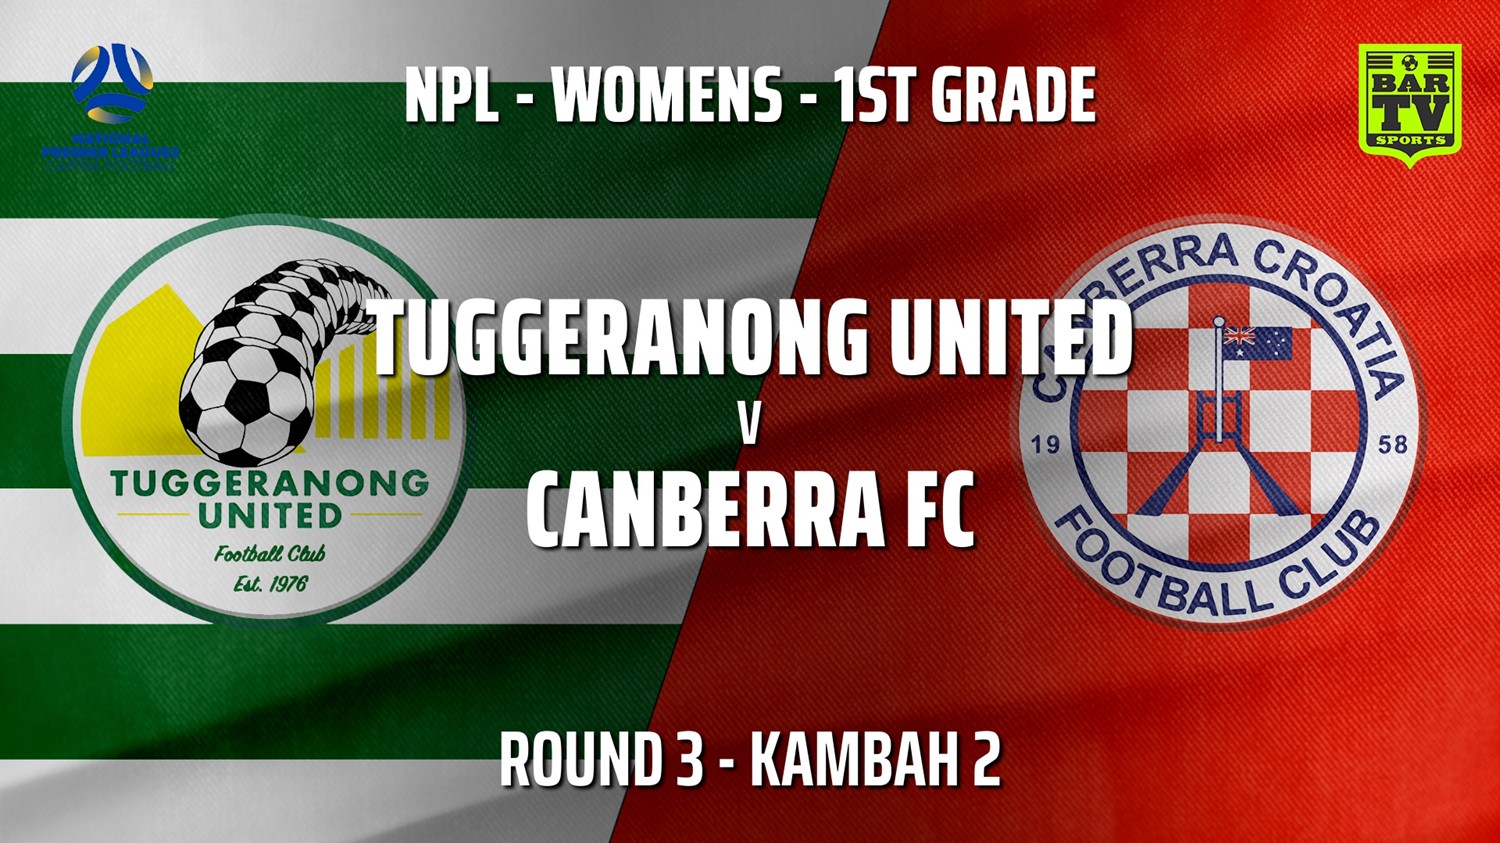 210422-NPLW - Capital Round 3 - Tuggeranong United FC (women) v Canberra FC (women) Minigame Slate Image